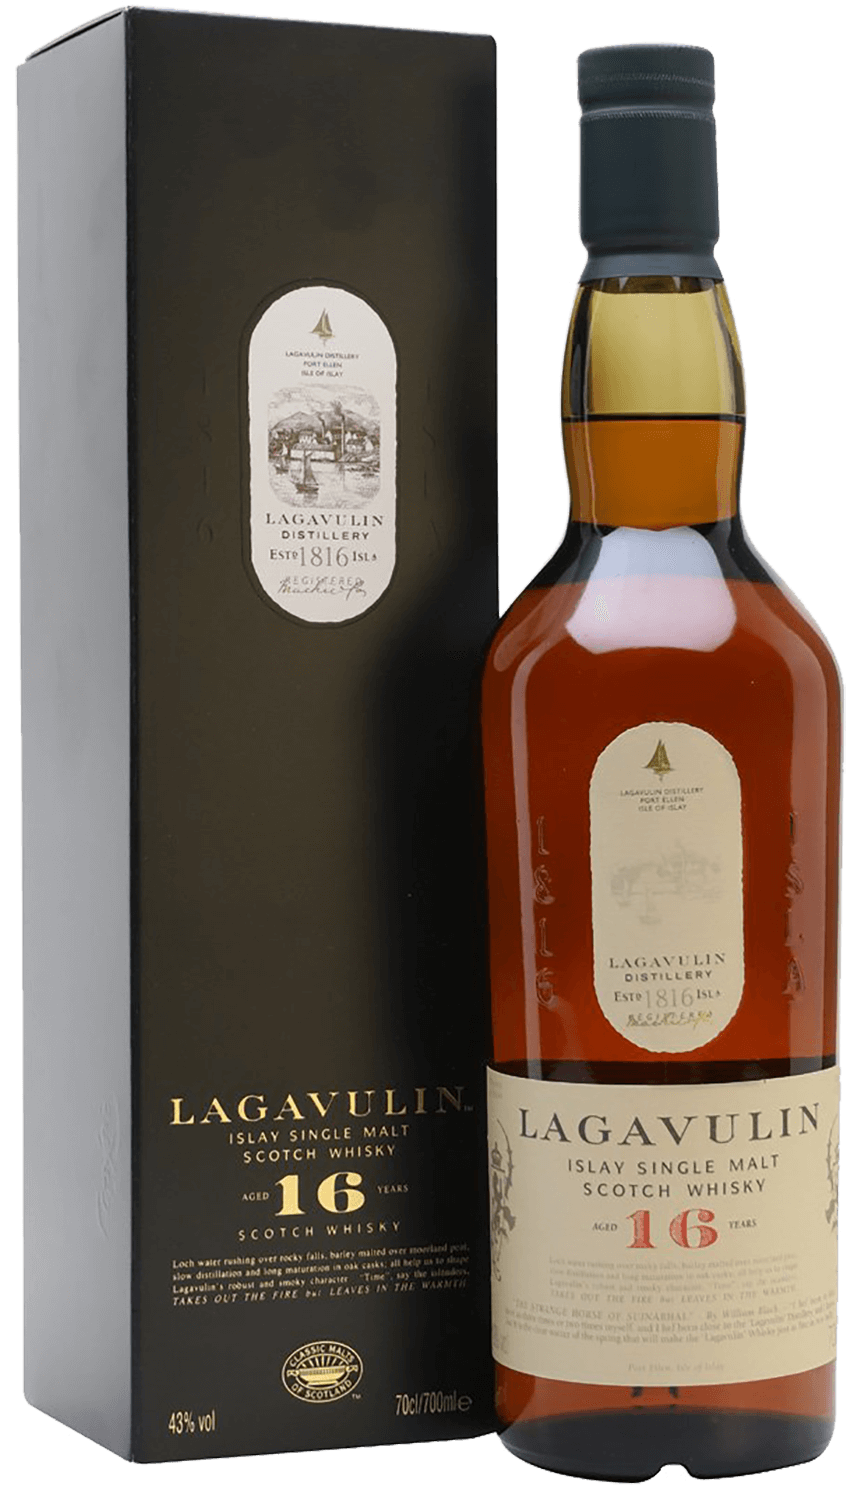 Lagavulin Islay single malt scotch whisky 16 Years Old (gift box)